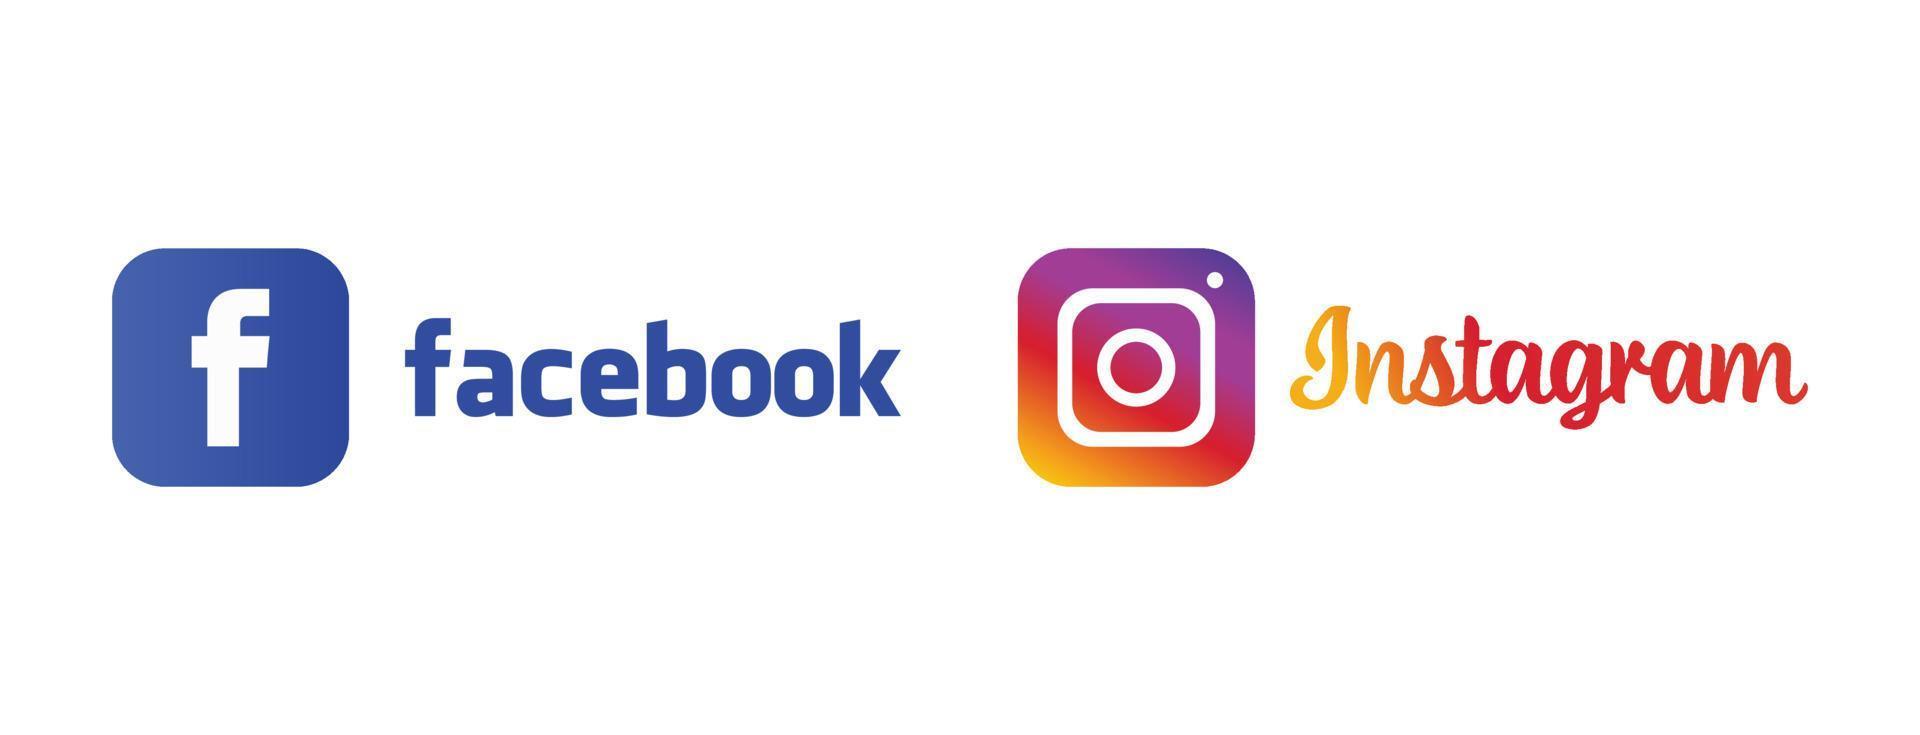 facebook instagram logo pictogram vector